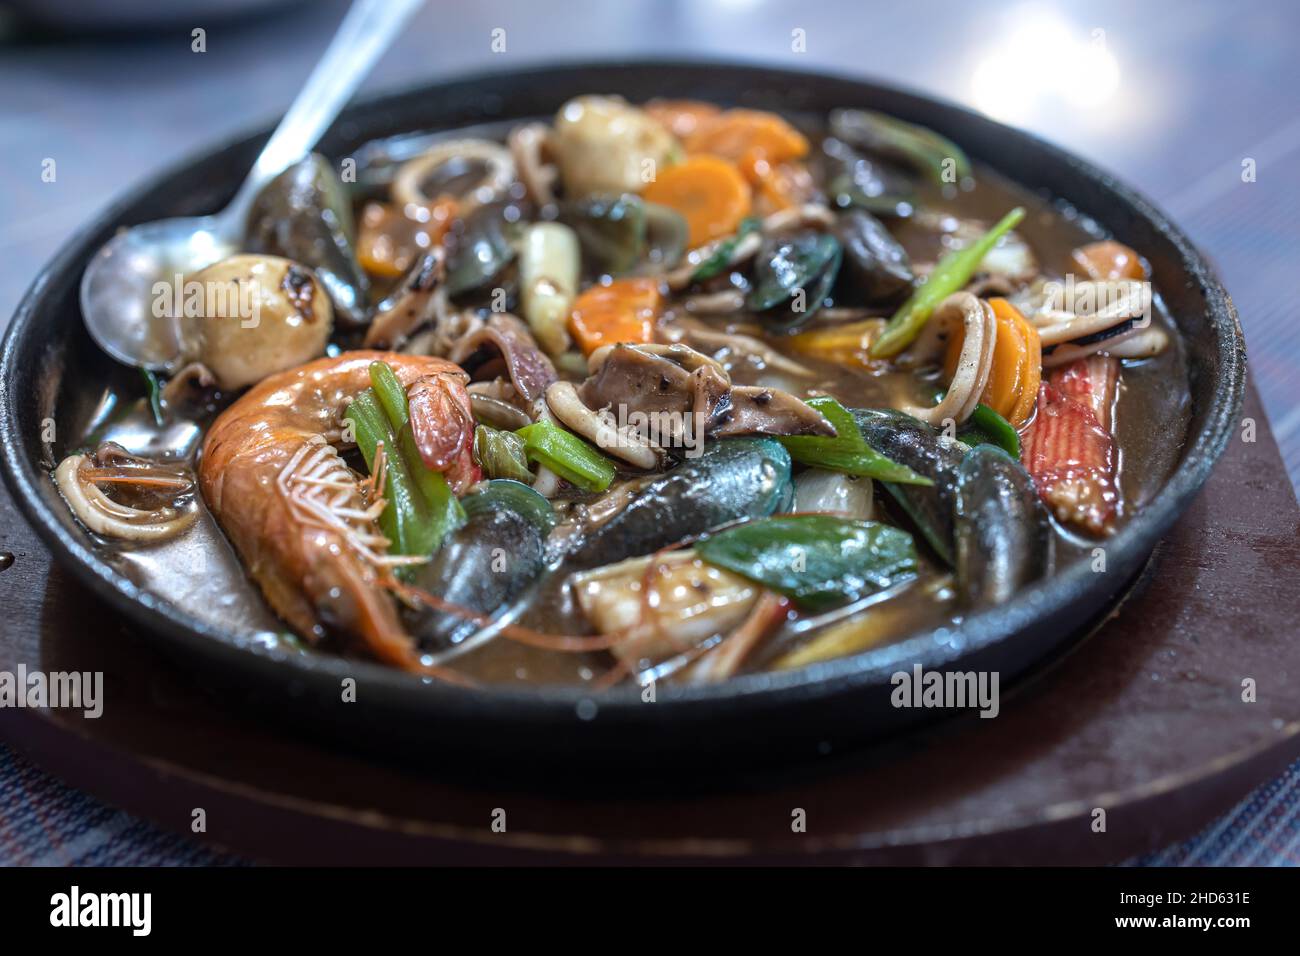 Filipino popular food sizzling mixed seafood at restaurant Stock Photo